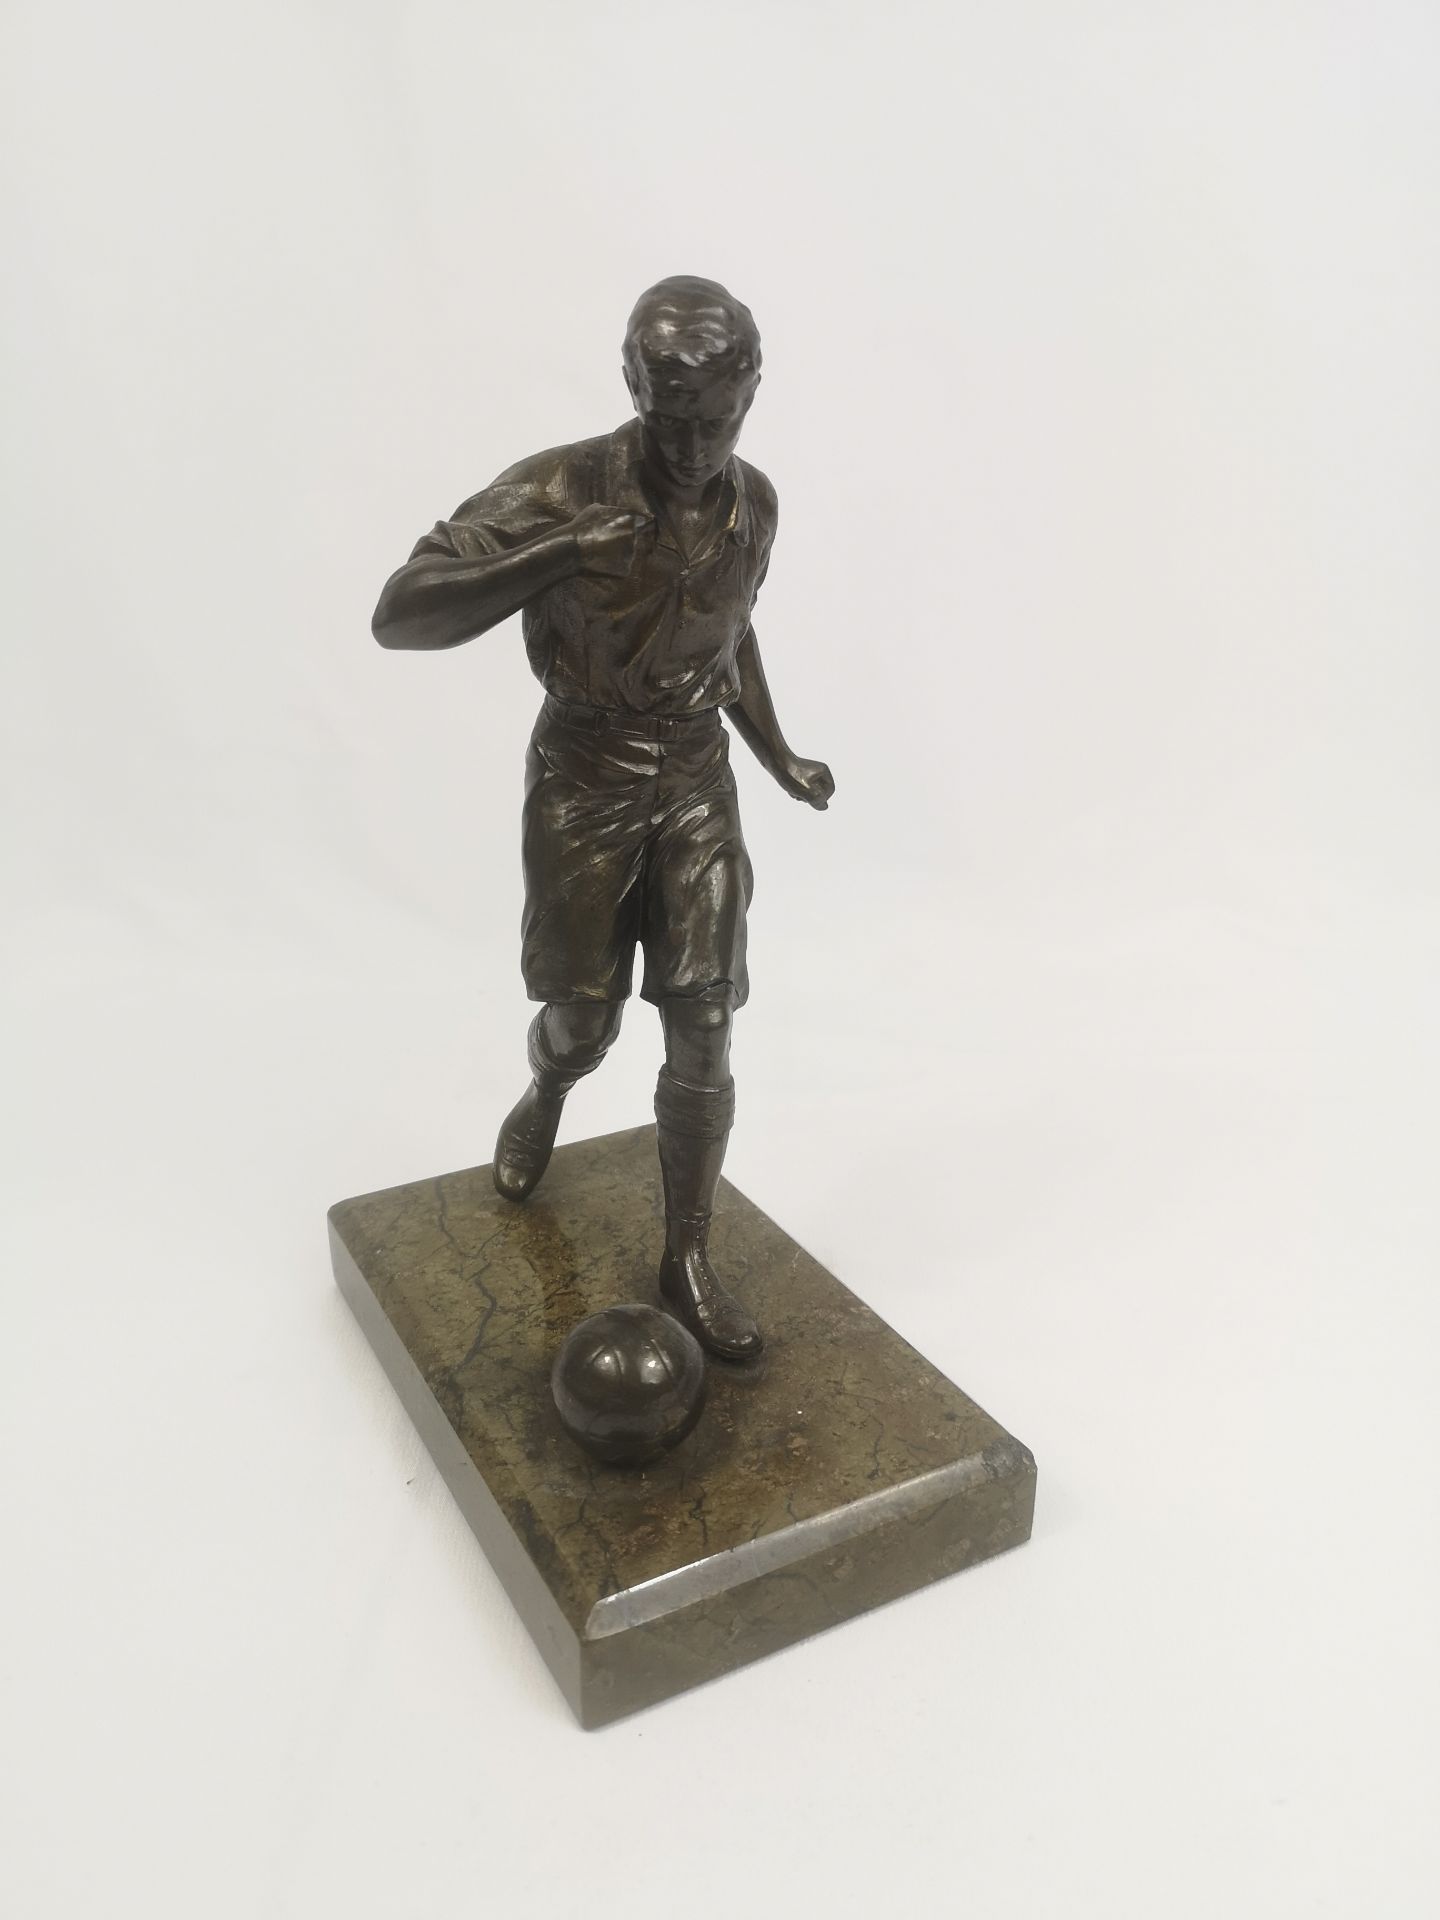 Bronzed figurine of a footballer